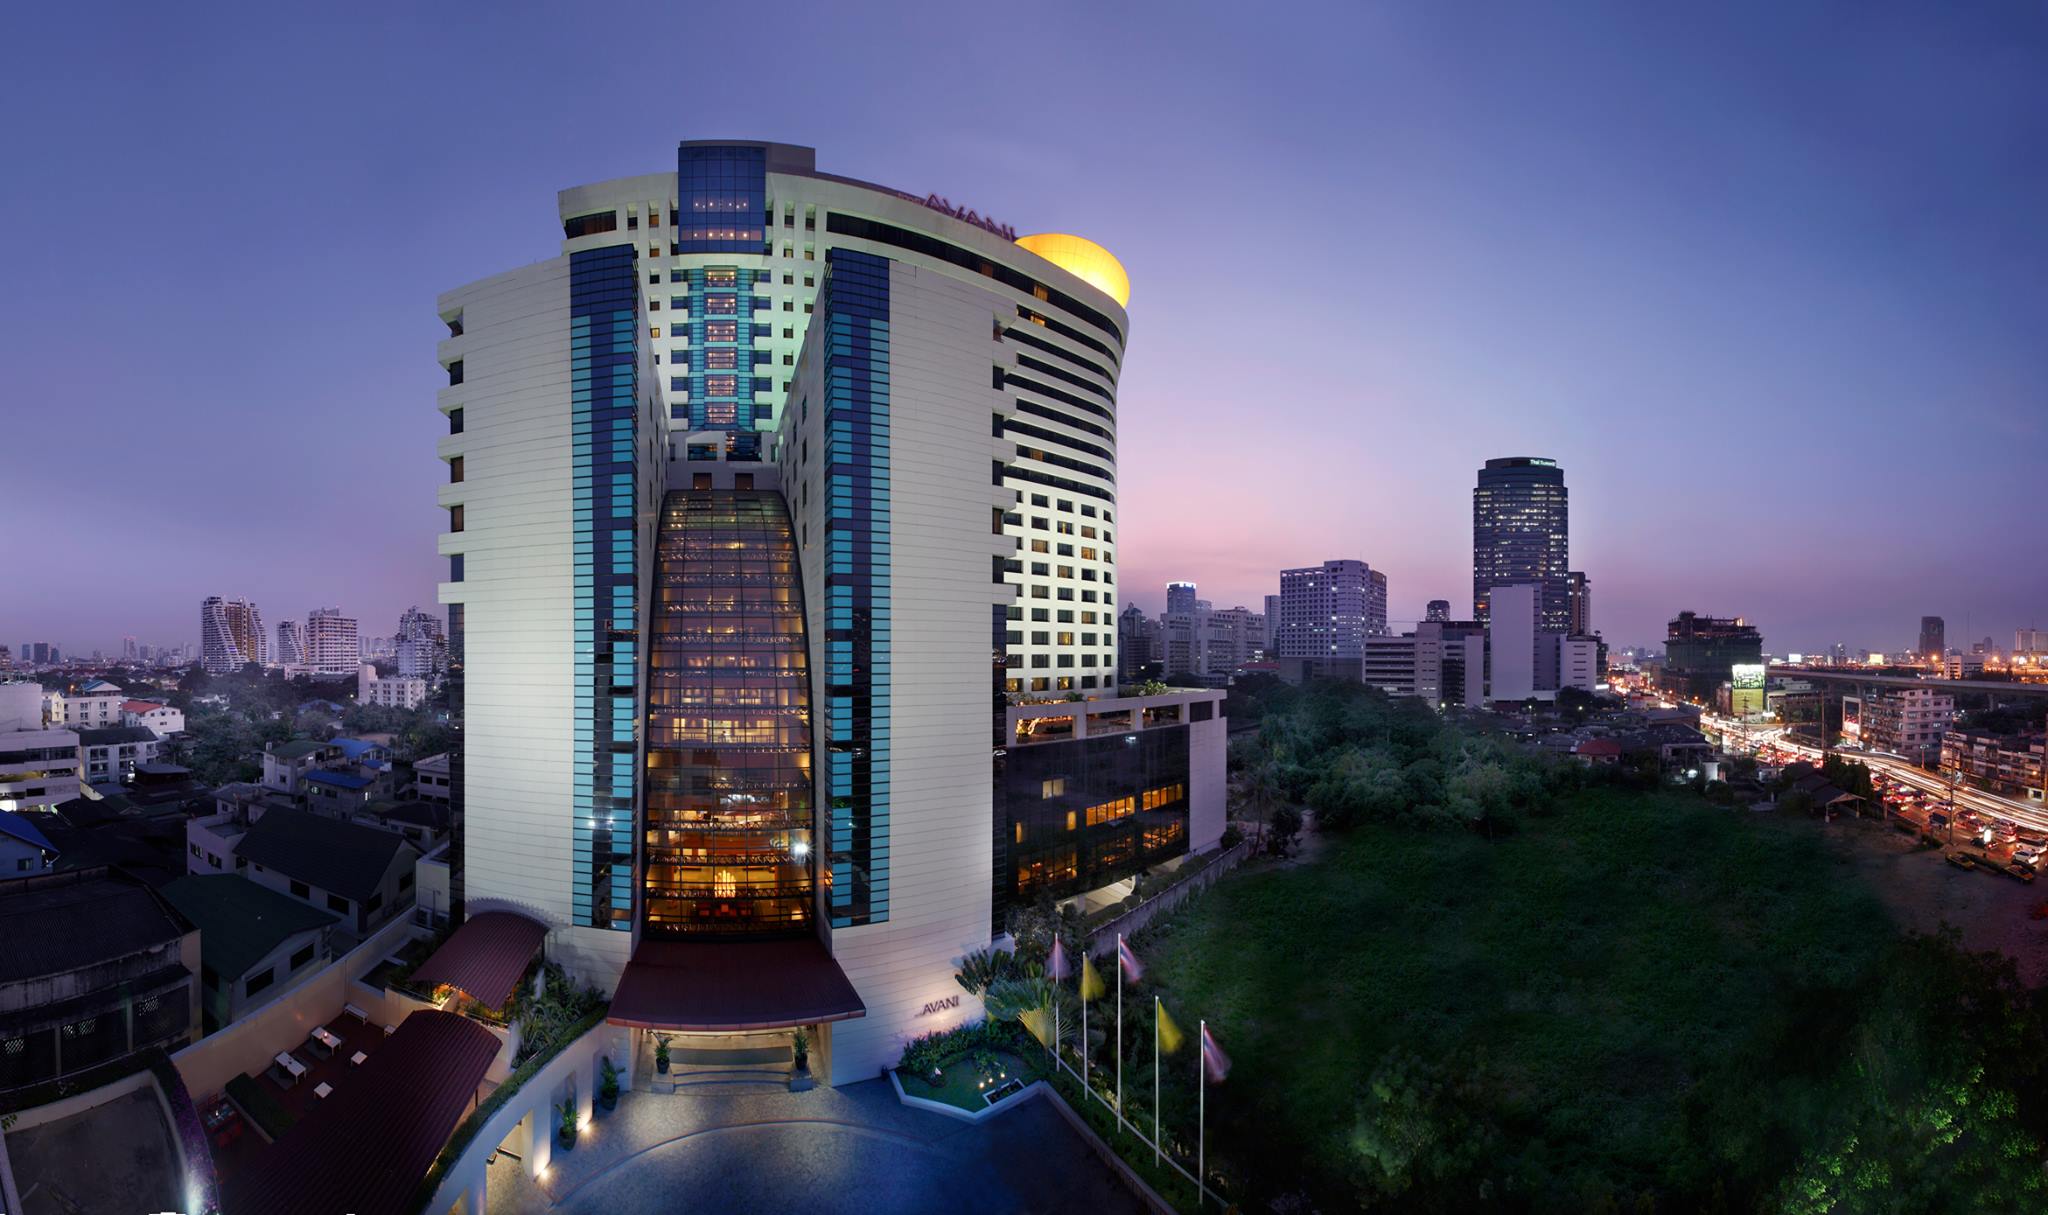 【AQ入境泰國隔離住宿】Avani Atrium Bangkok 曼谷中庭安凡尼五星級飯店：8 天 7 夜隔離住宿套餐